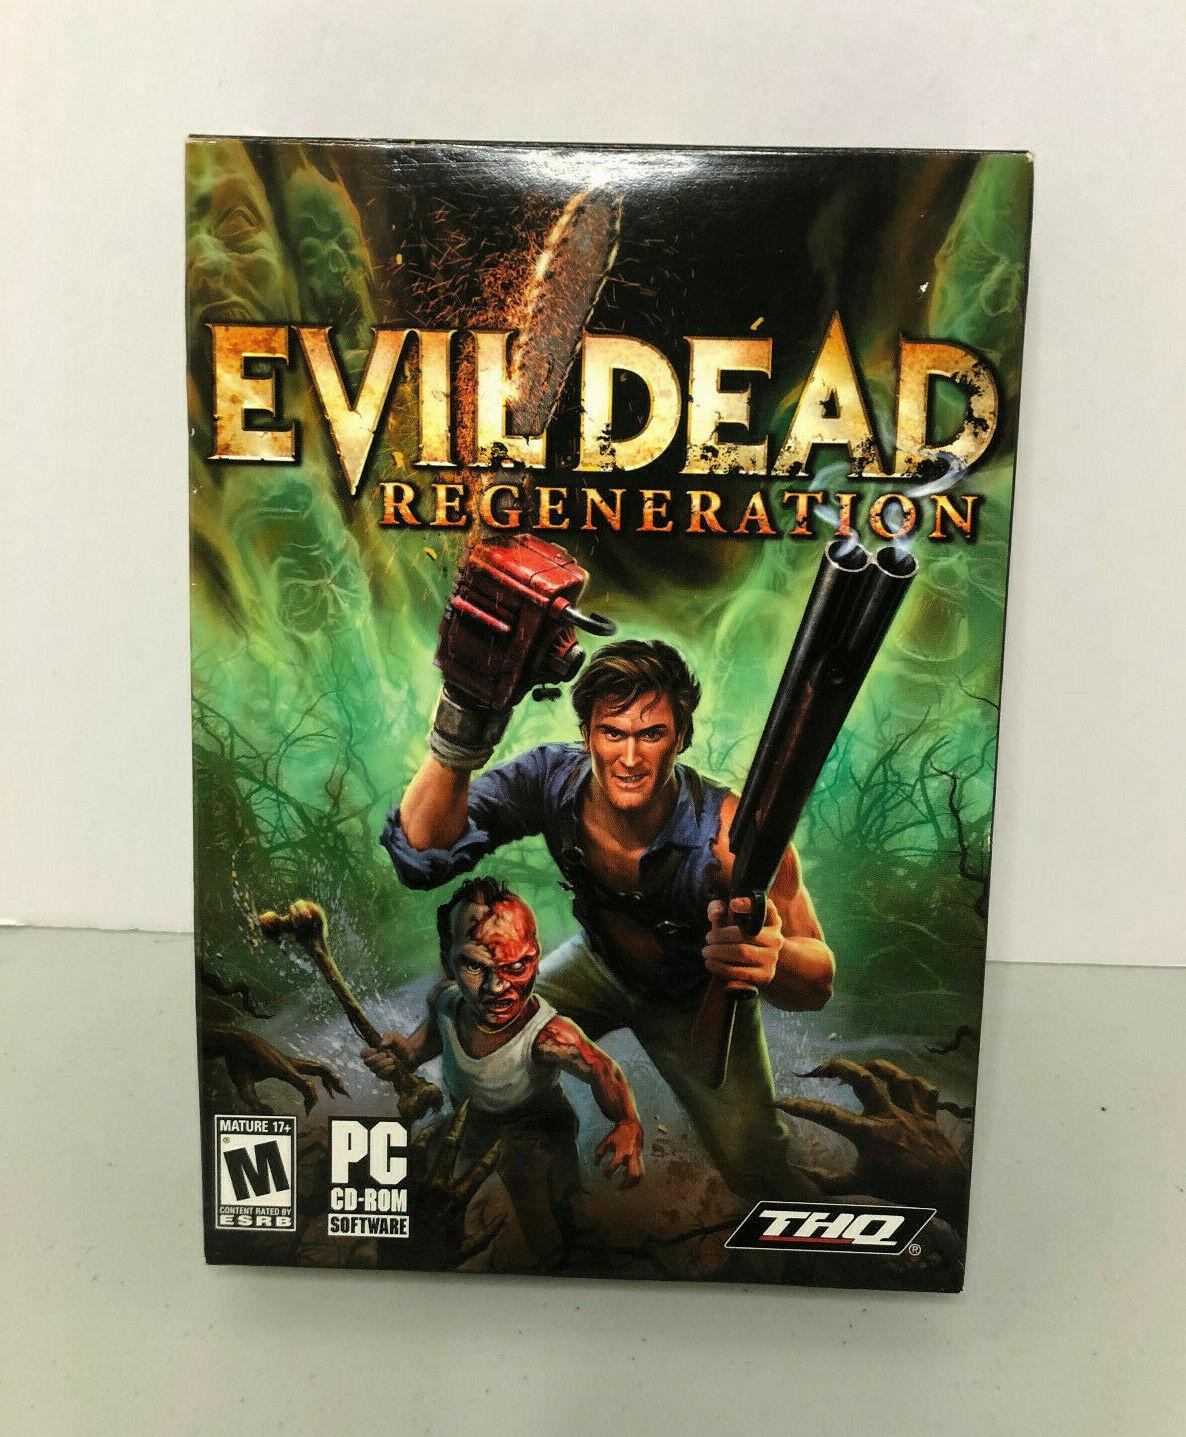 2224x1668px, free download, HD wallpaper: Evil Dead Regeneration, Video  Game